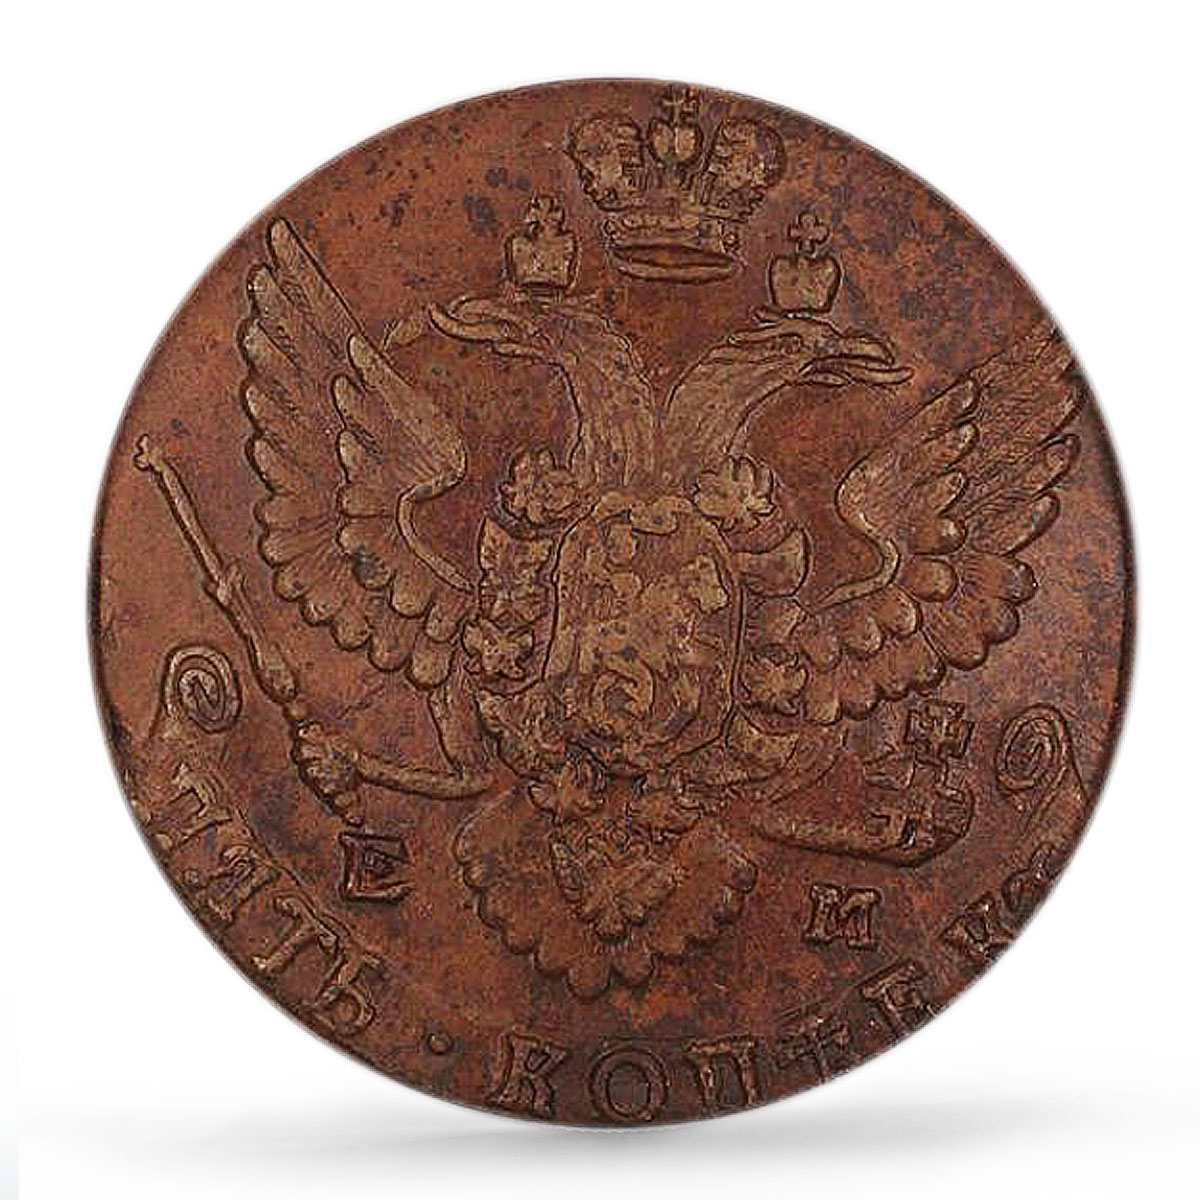 Russia Empire 5 kopecks Ekaterina II Large Crown Bit-642 AU58 PCGS Cu coin 1788